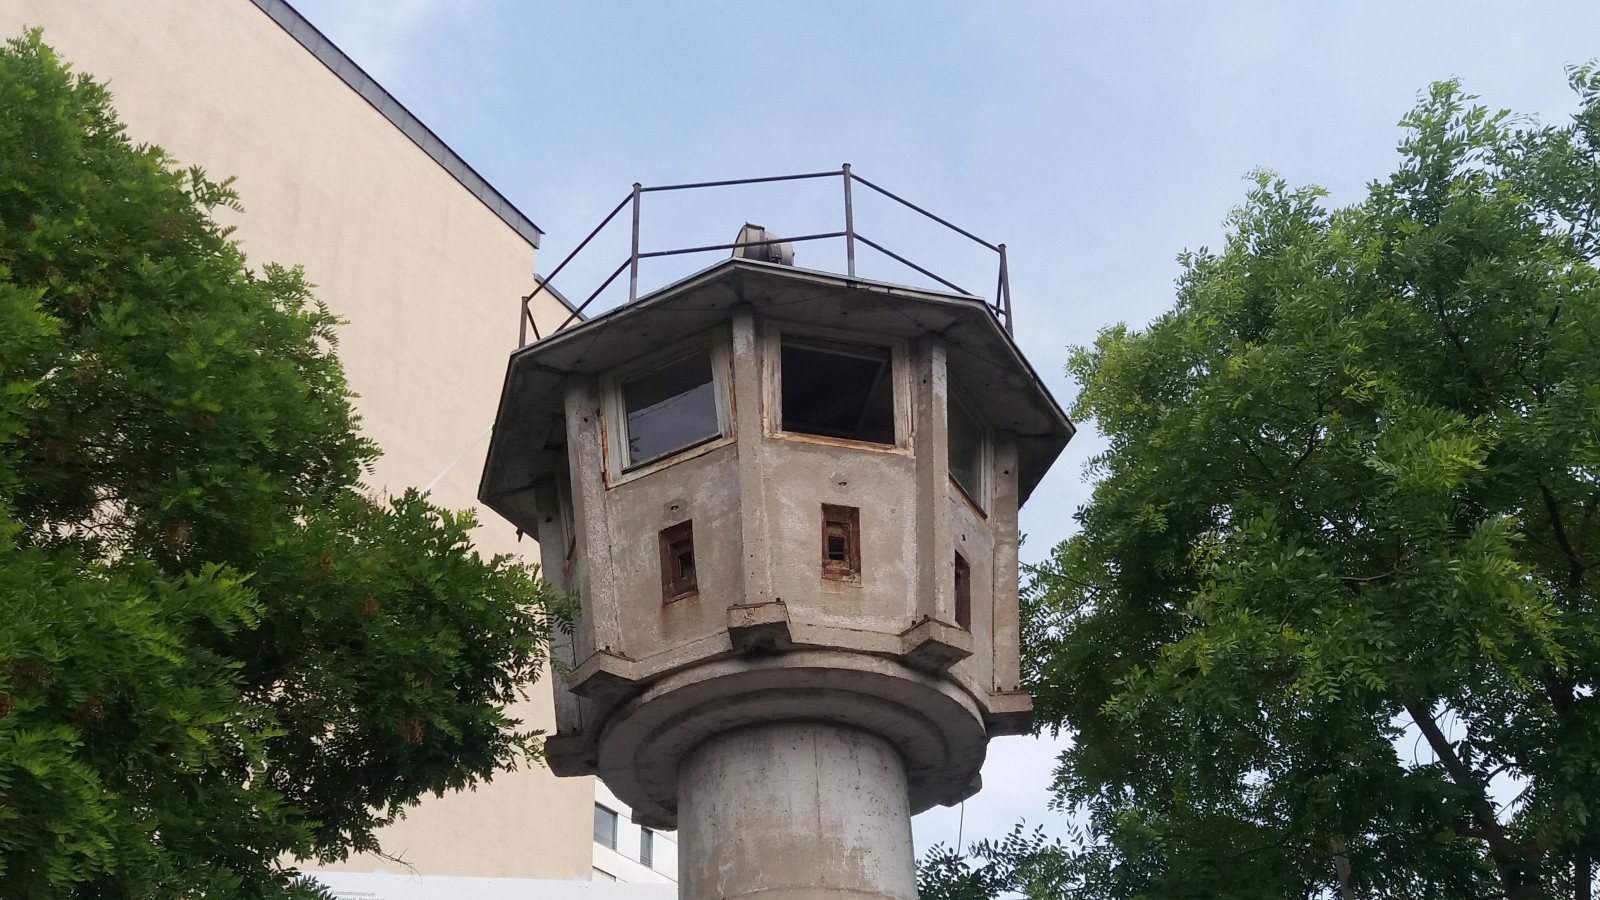 Berlin watchtower